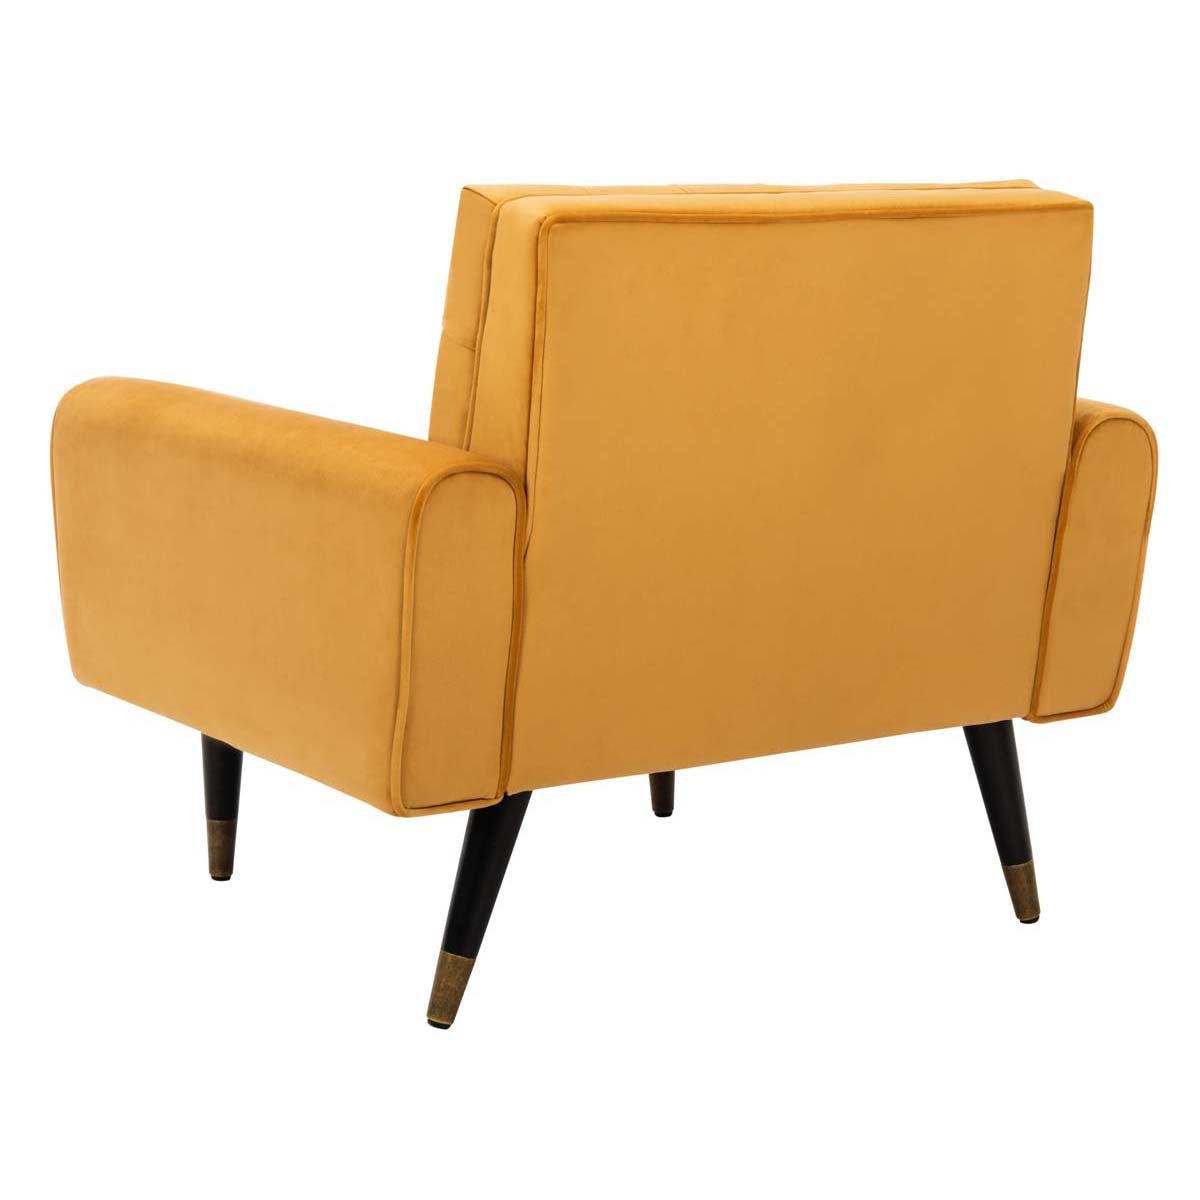 Safavieh Amaris Tufted Accent Chair , ACH4503 - Marigold/Black